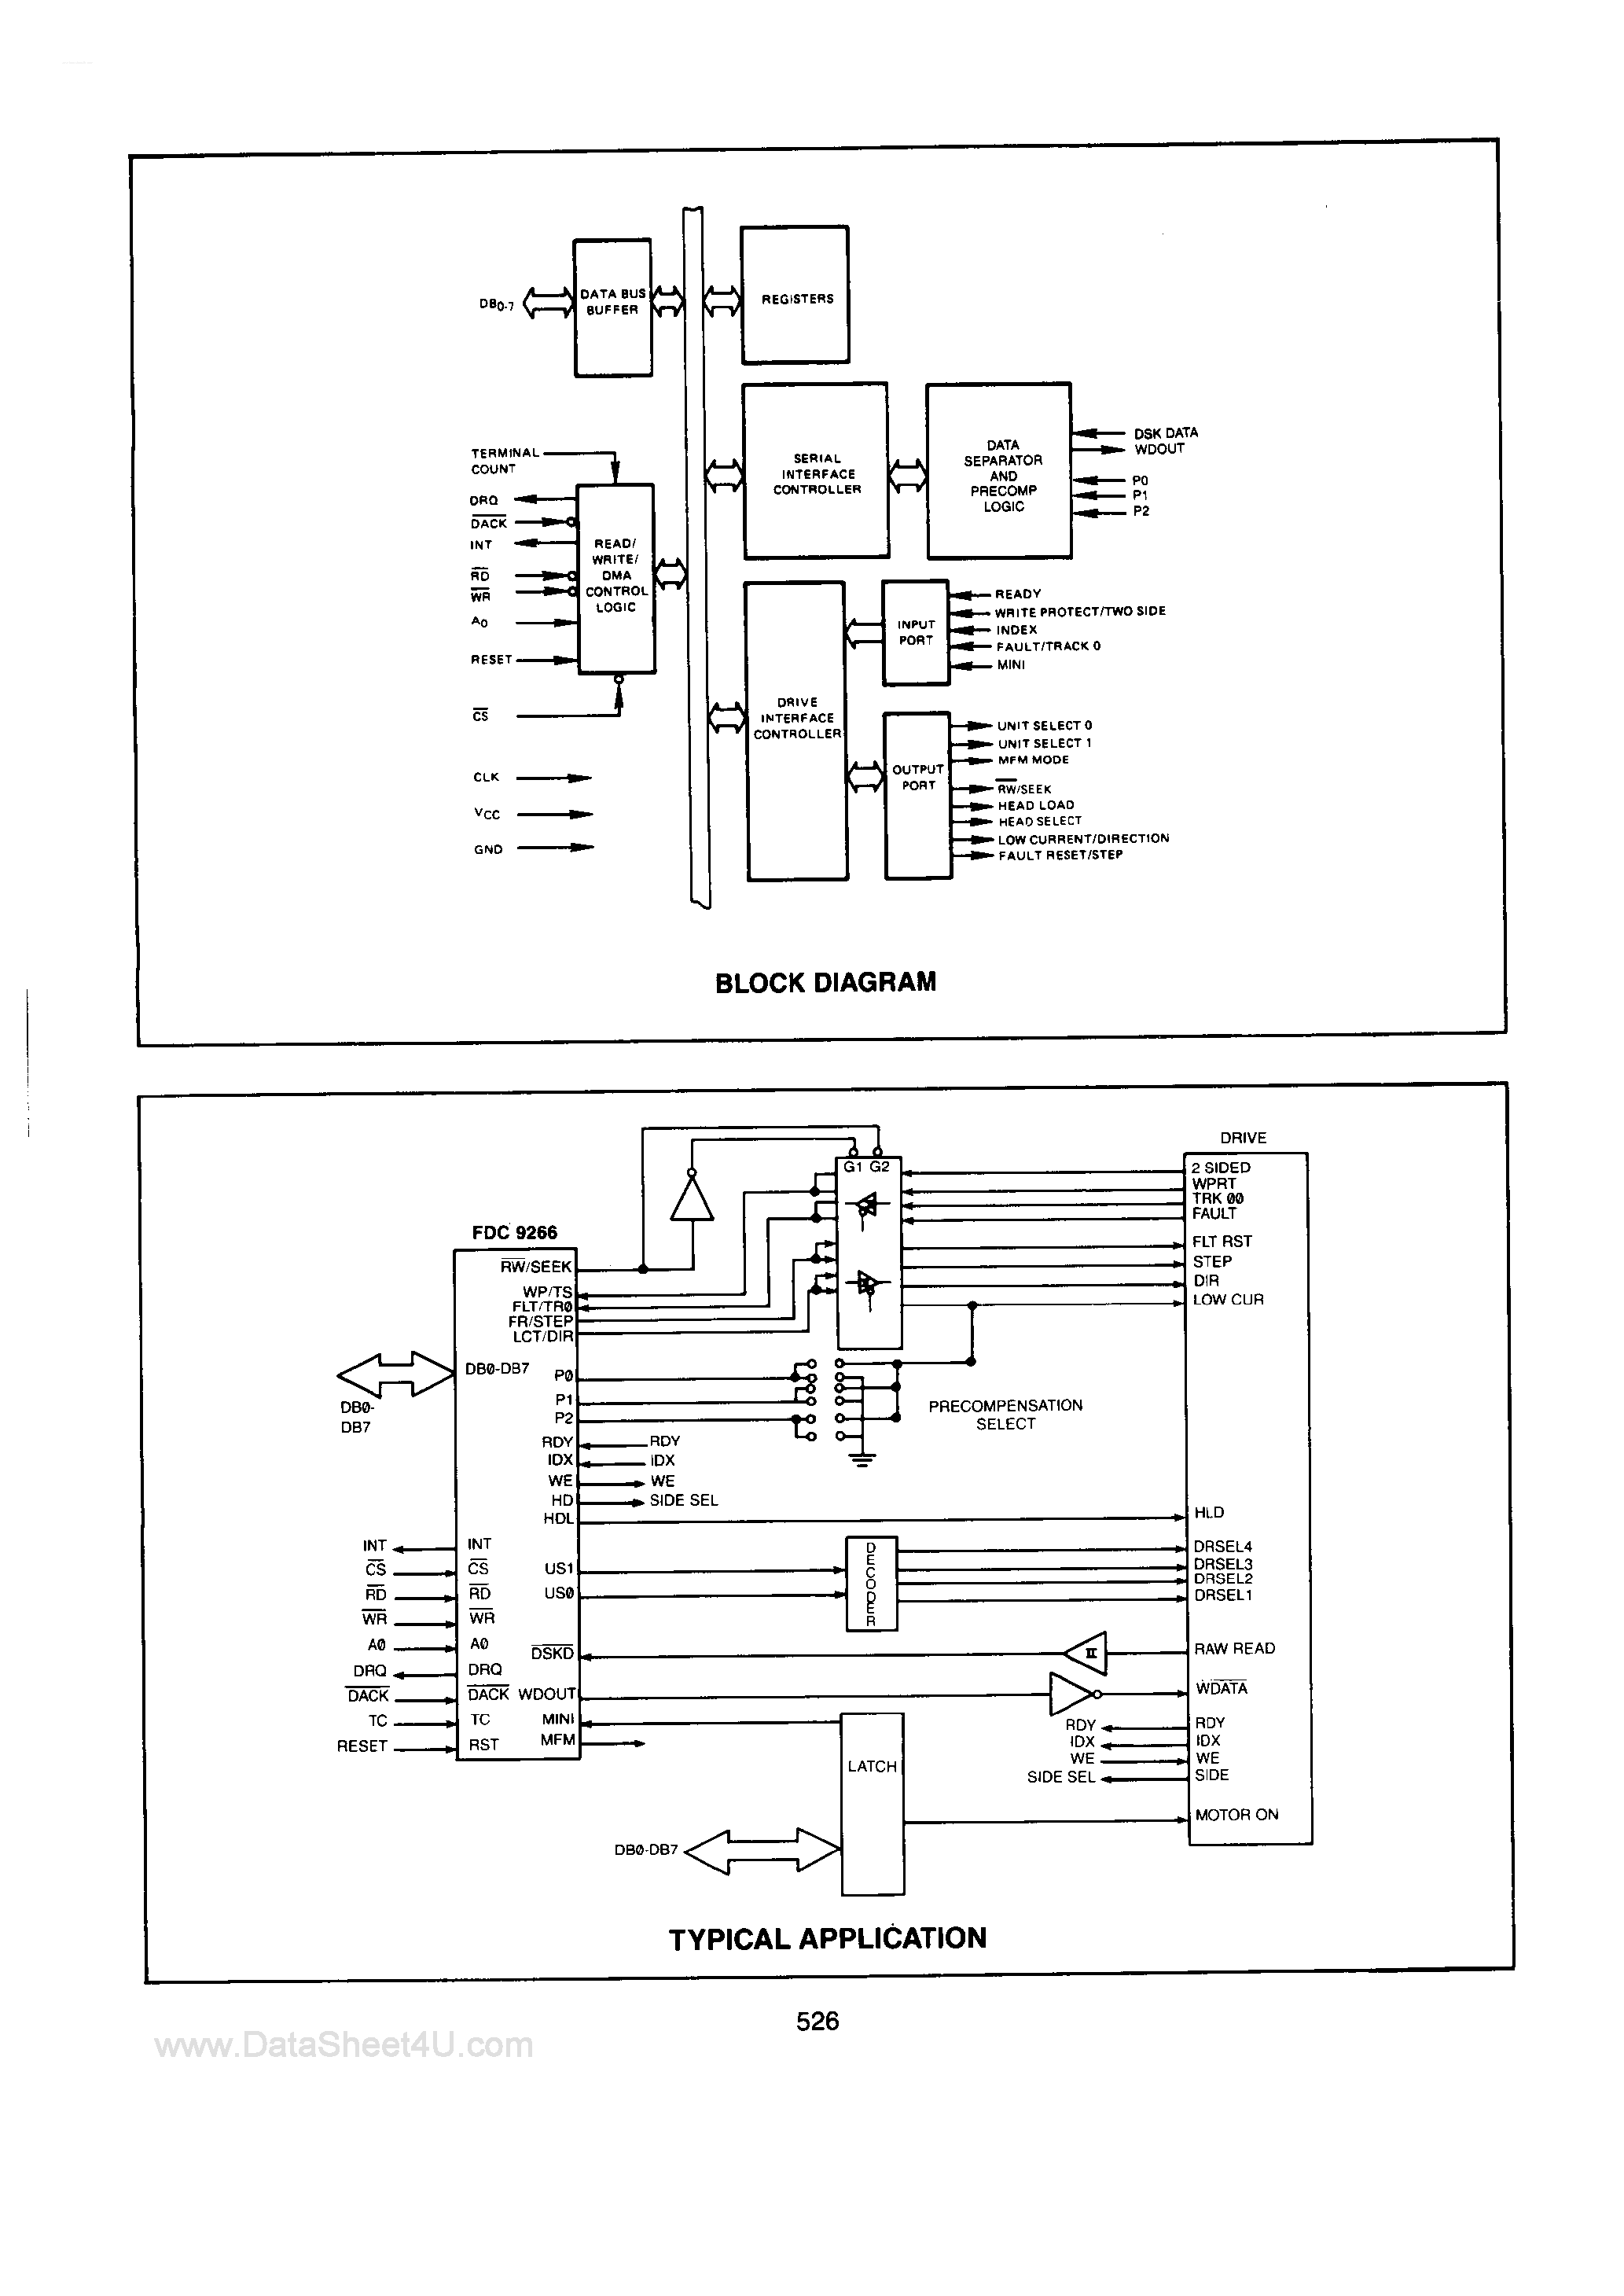 Даташит FDC9266 - Single/Double Density Enhanced Floppy Disk Controller страница 2